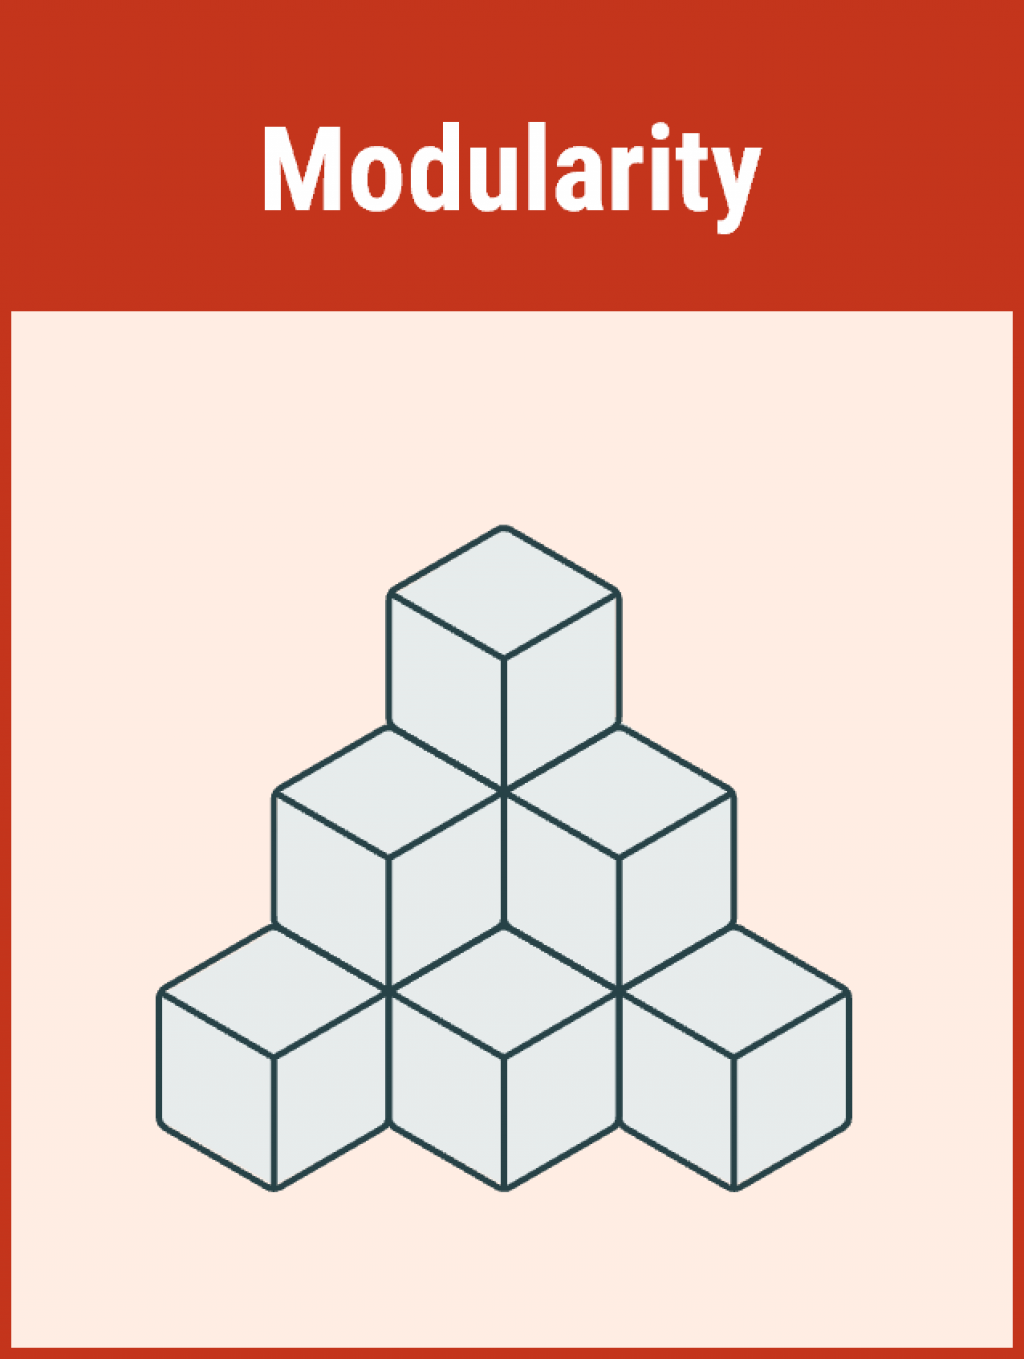 Modularity principle of information models